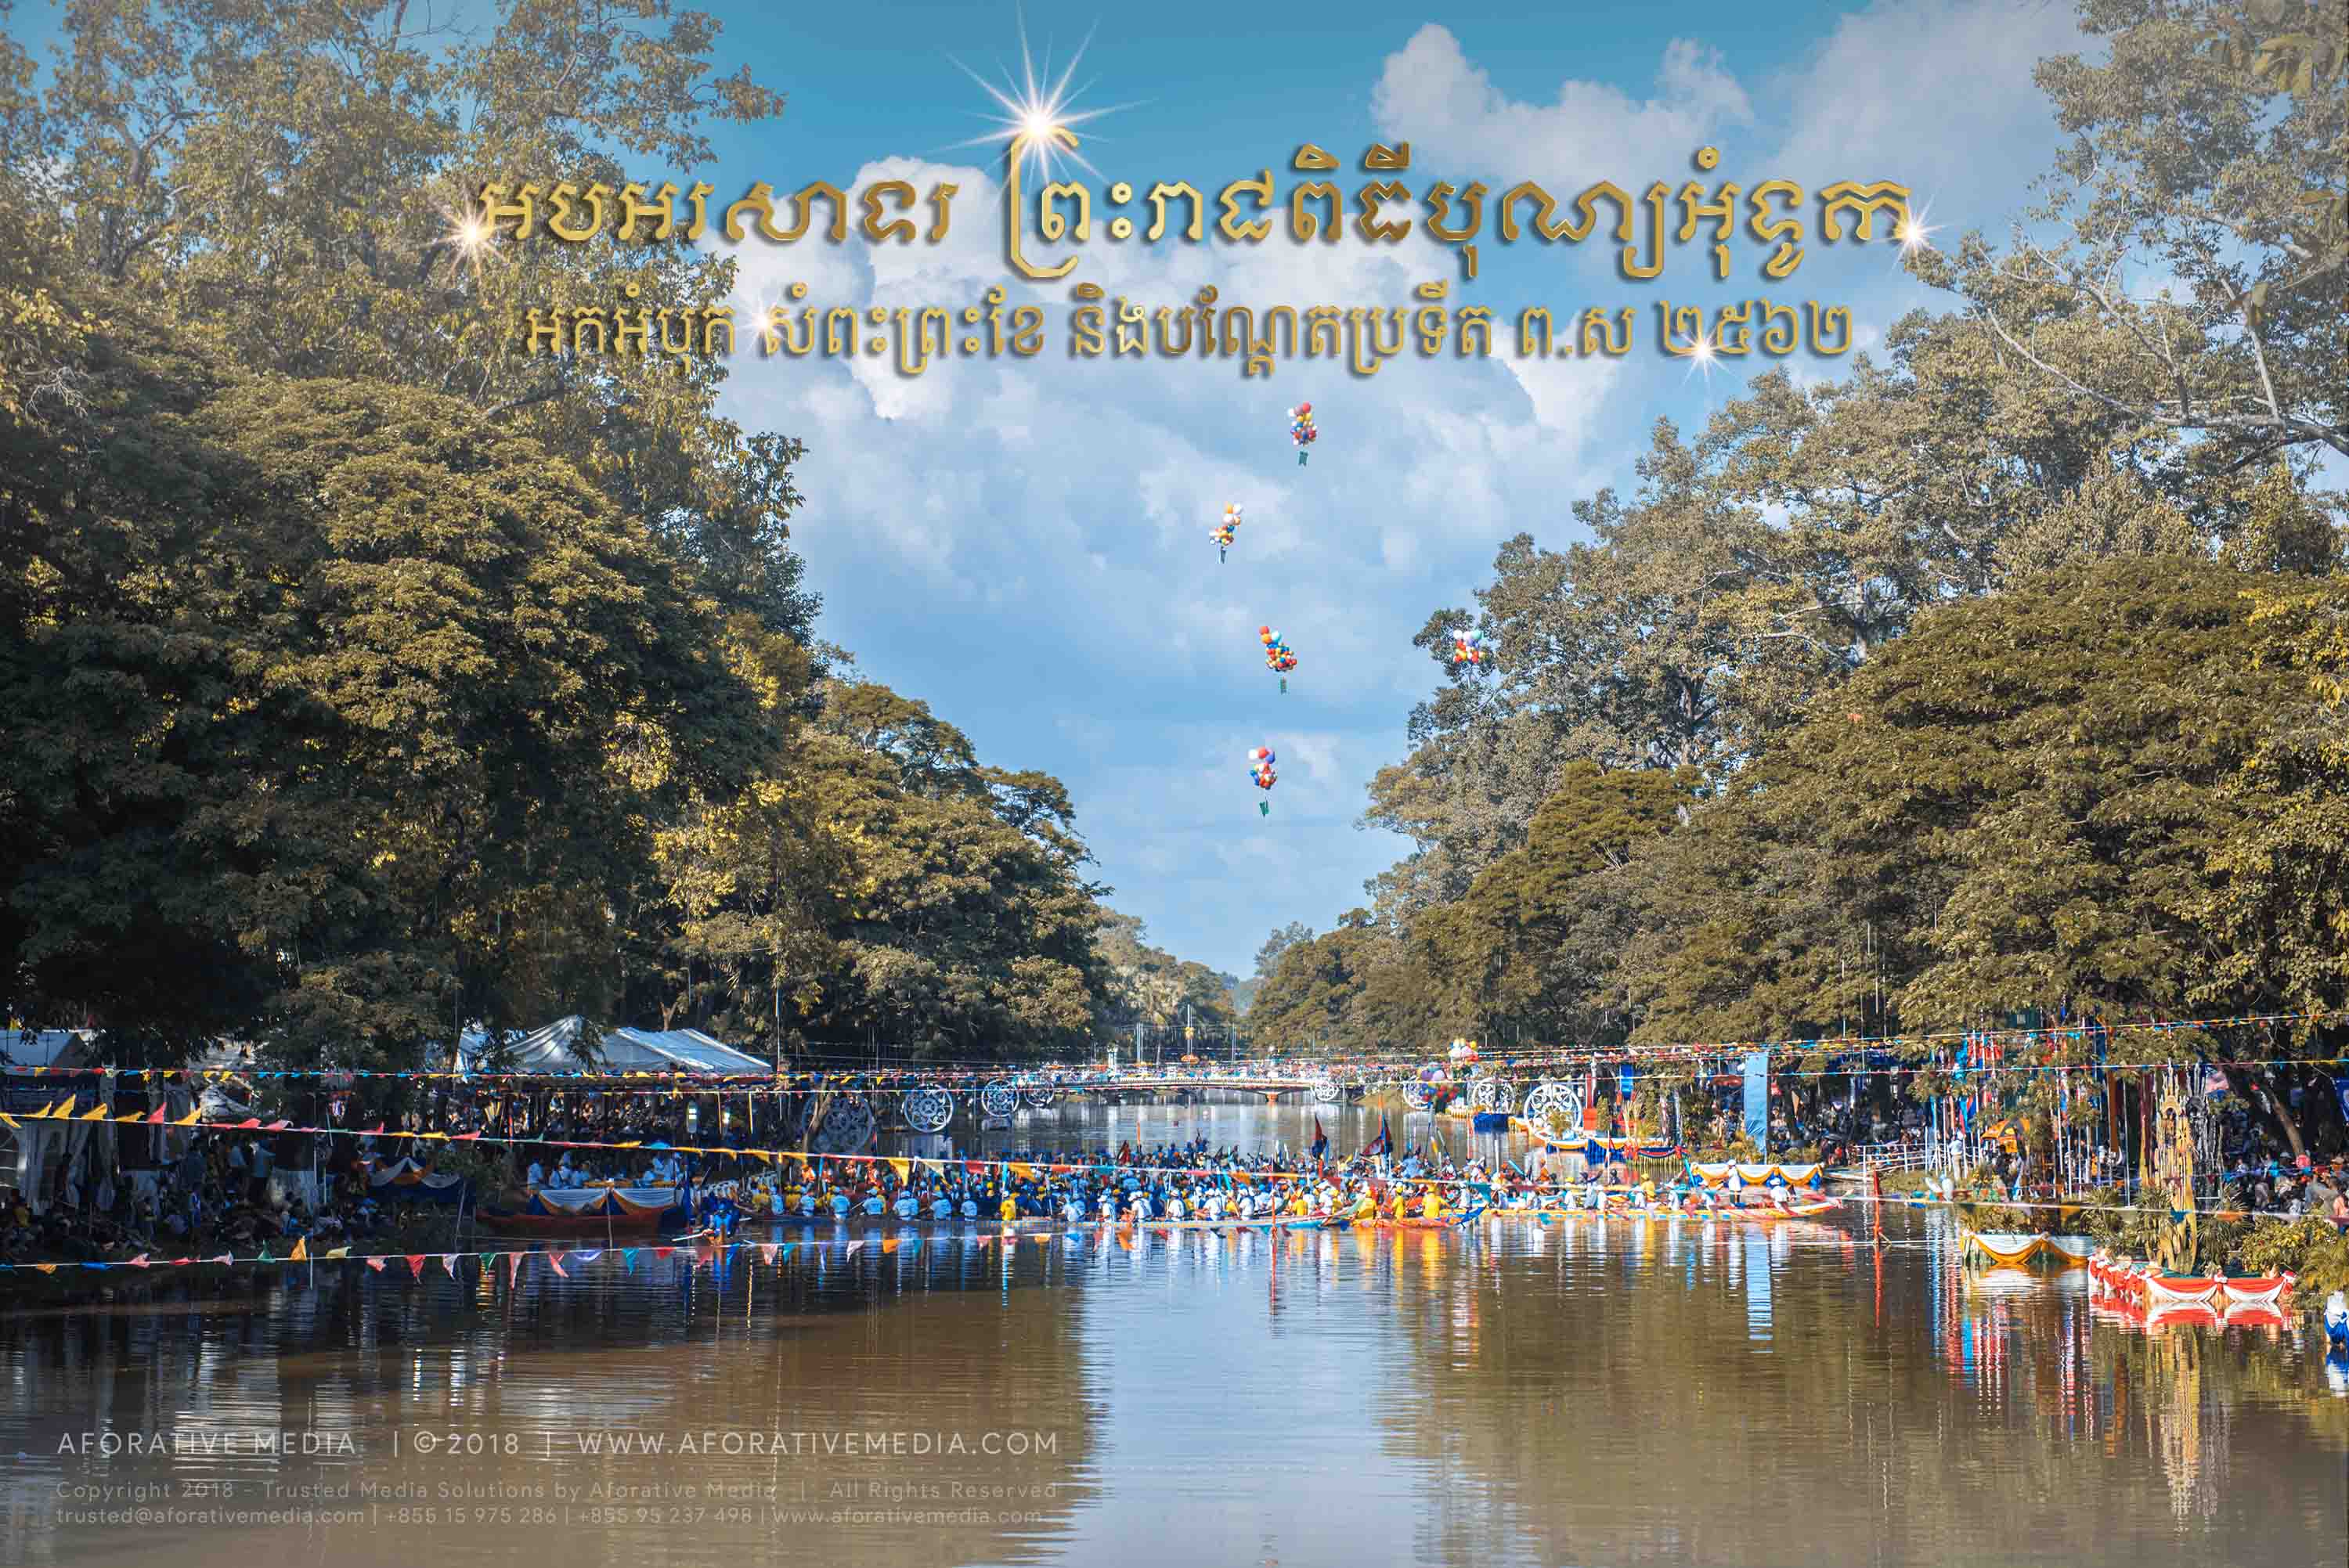 Siem Reap Angkor Wat Water Festival 2018